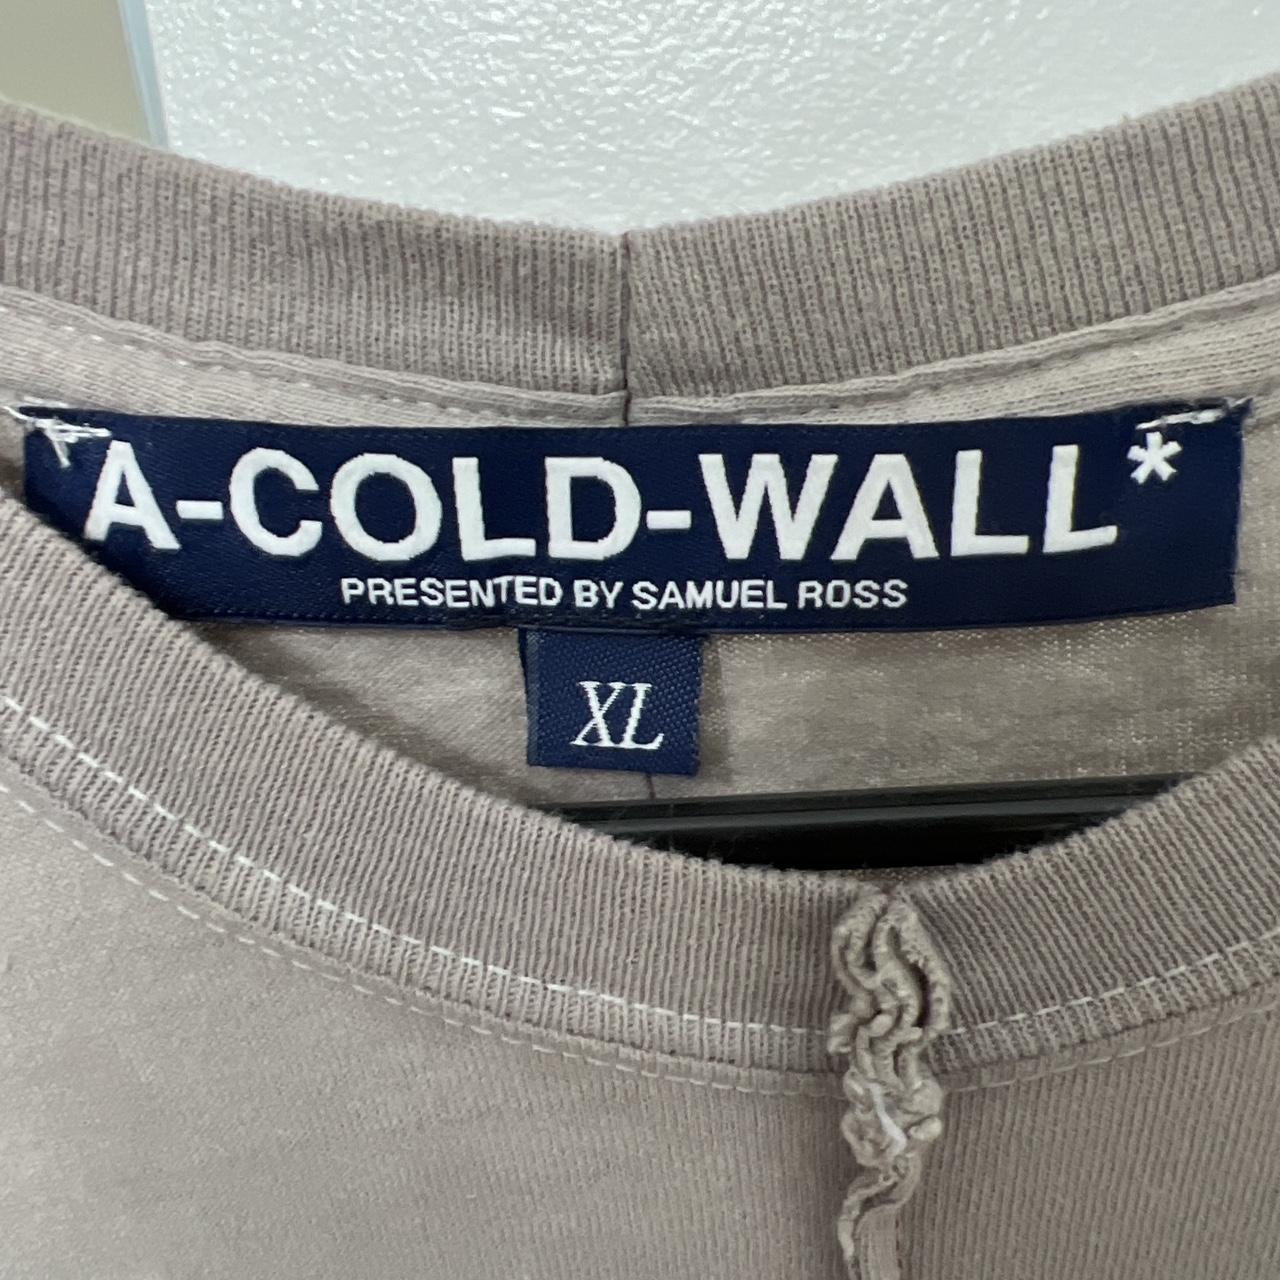 A-COLD-WALL Men's Grey T-shirt (7)